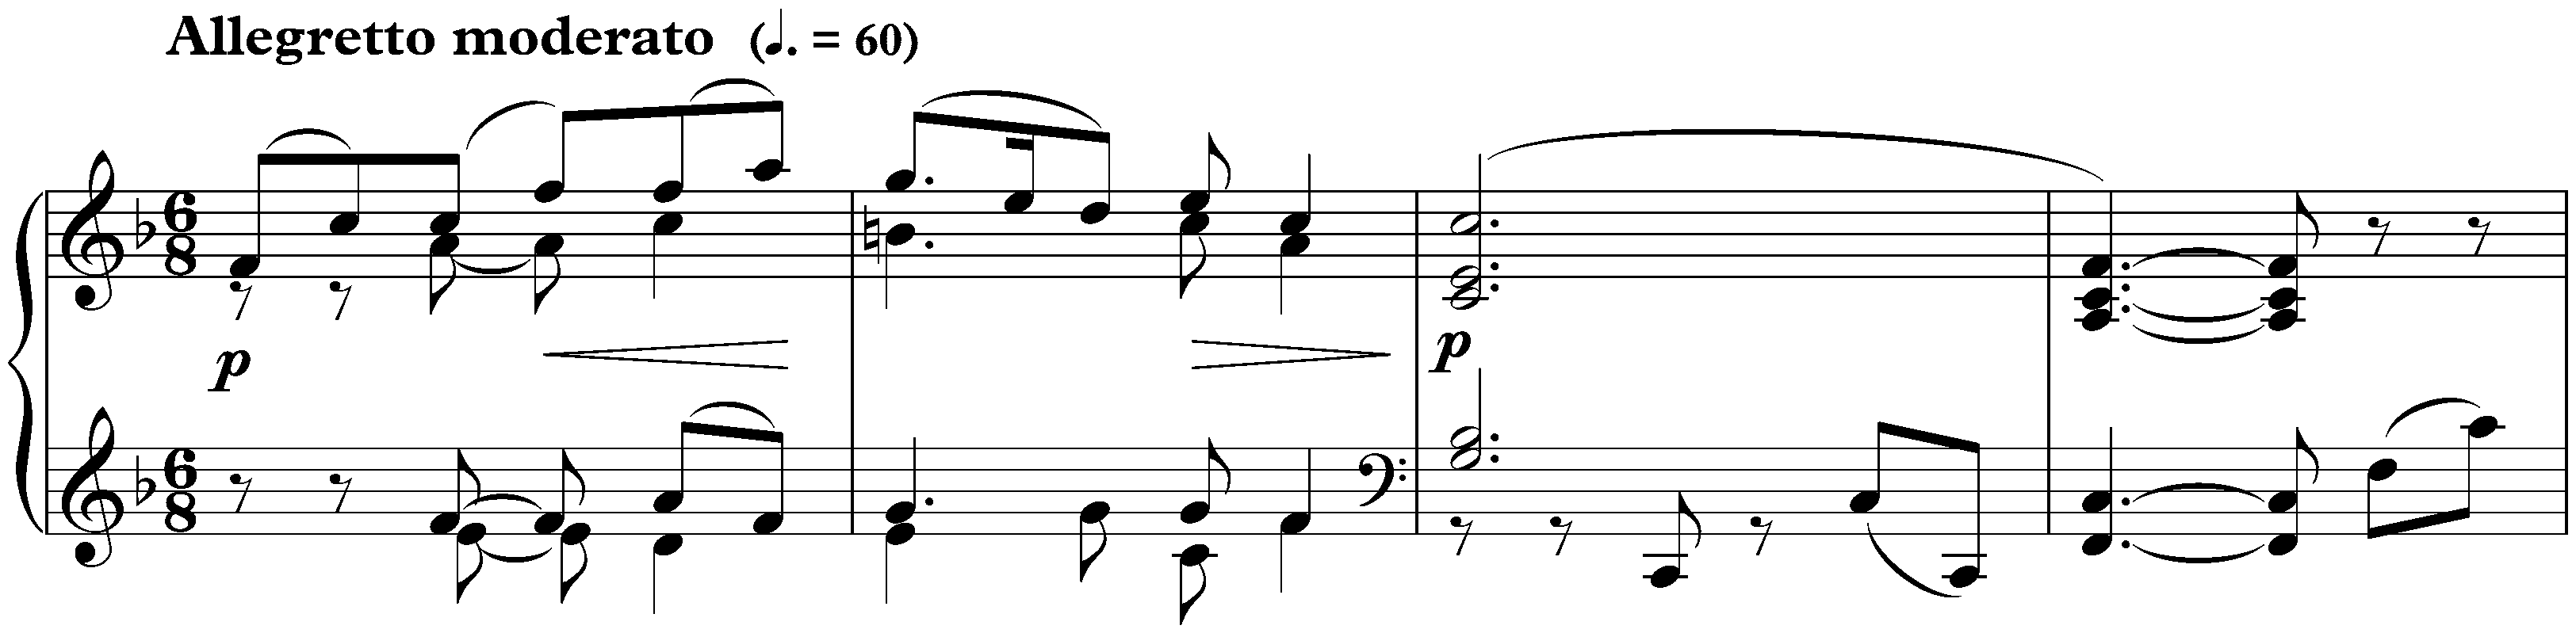 Neuf Préludes, op. 103; 4. F major